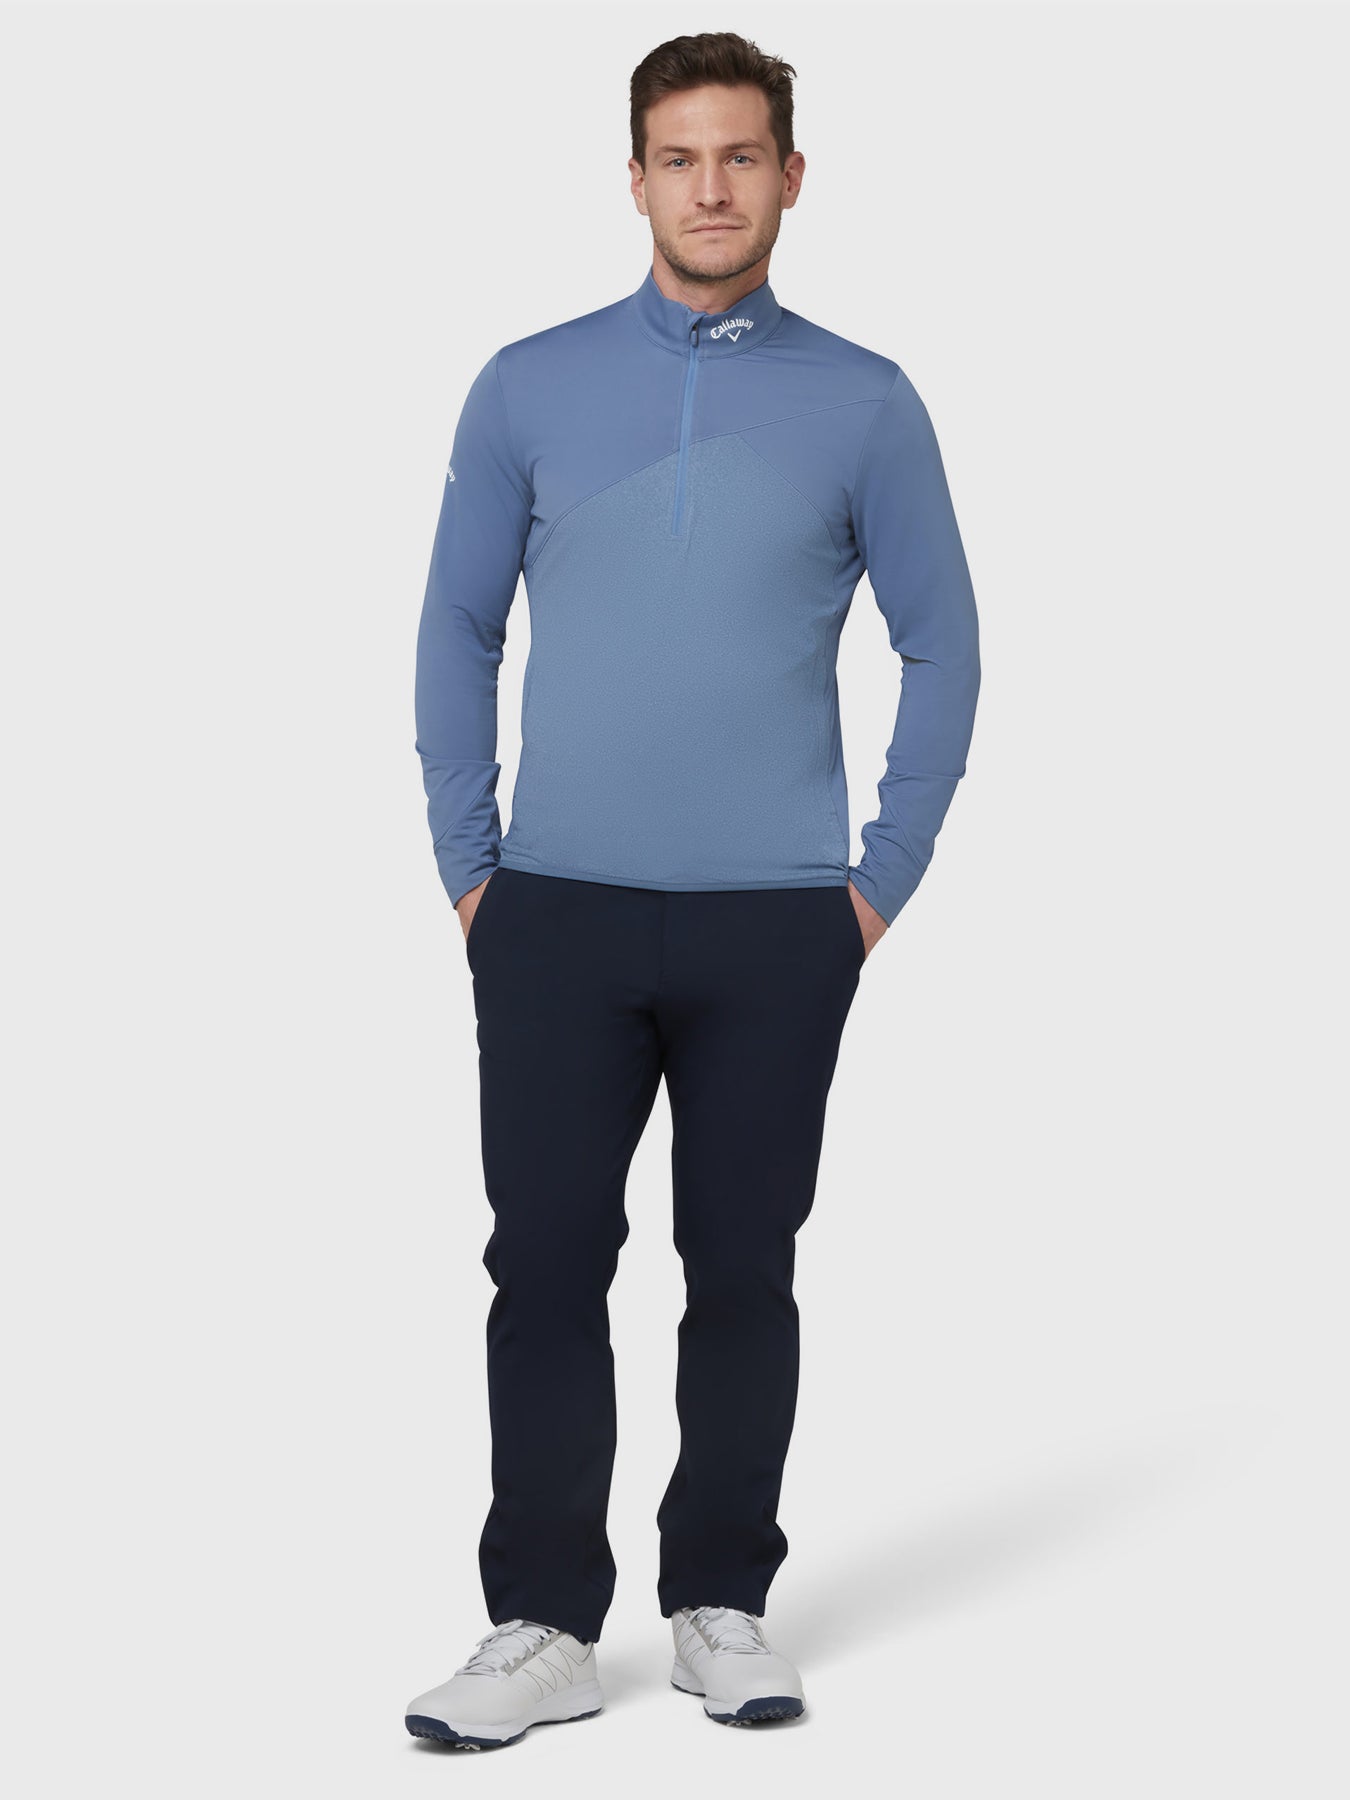 View Aquapel Ultra Light Quarter Zip Sweatshirt In Blue Horizon Blue Horizon S information